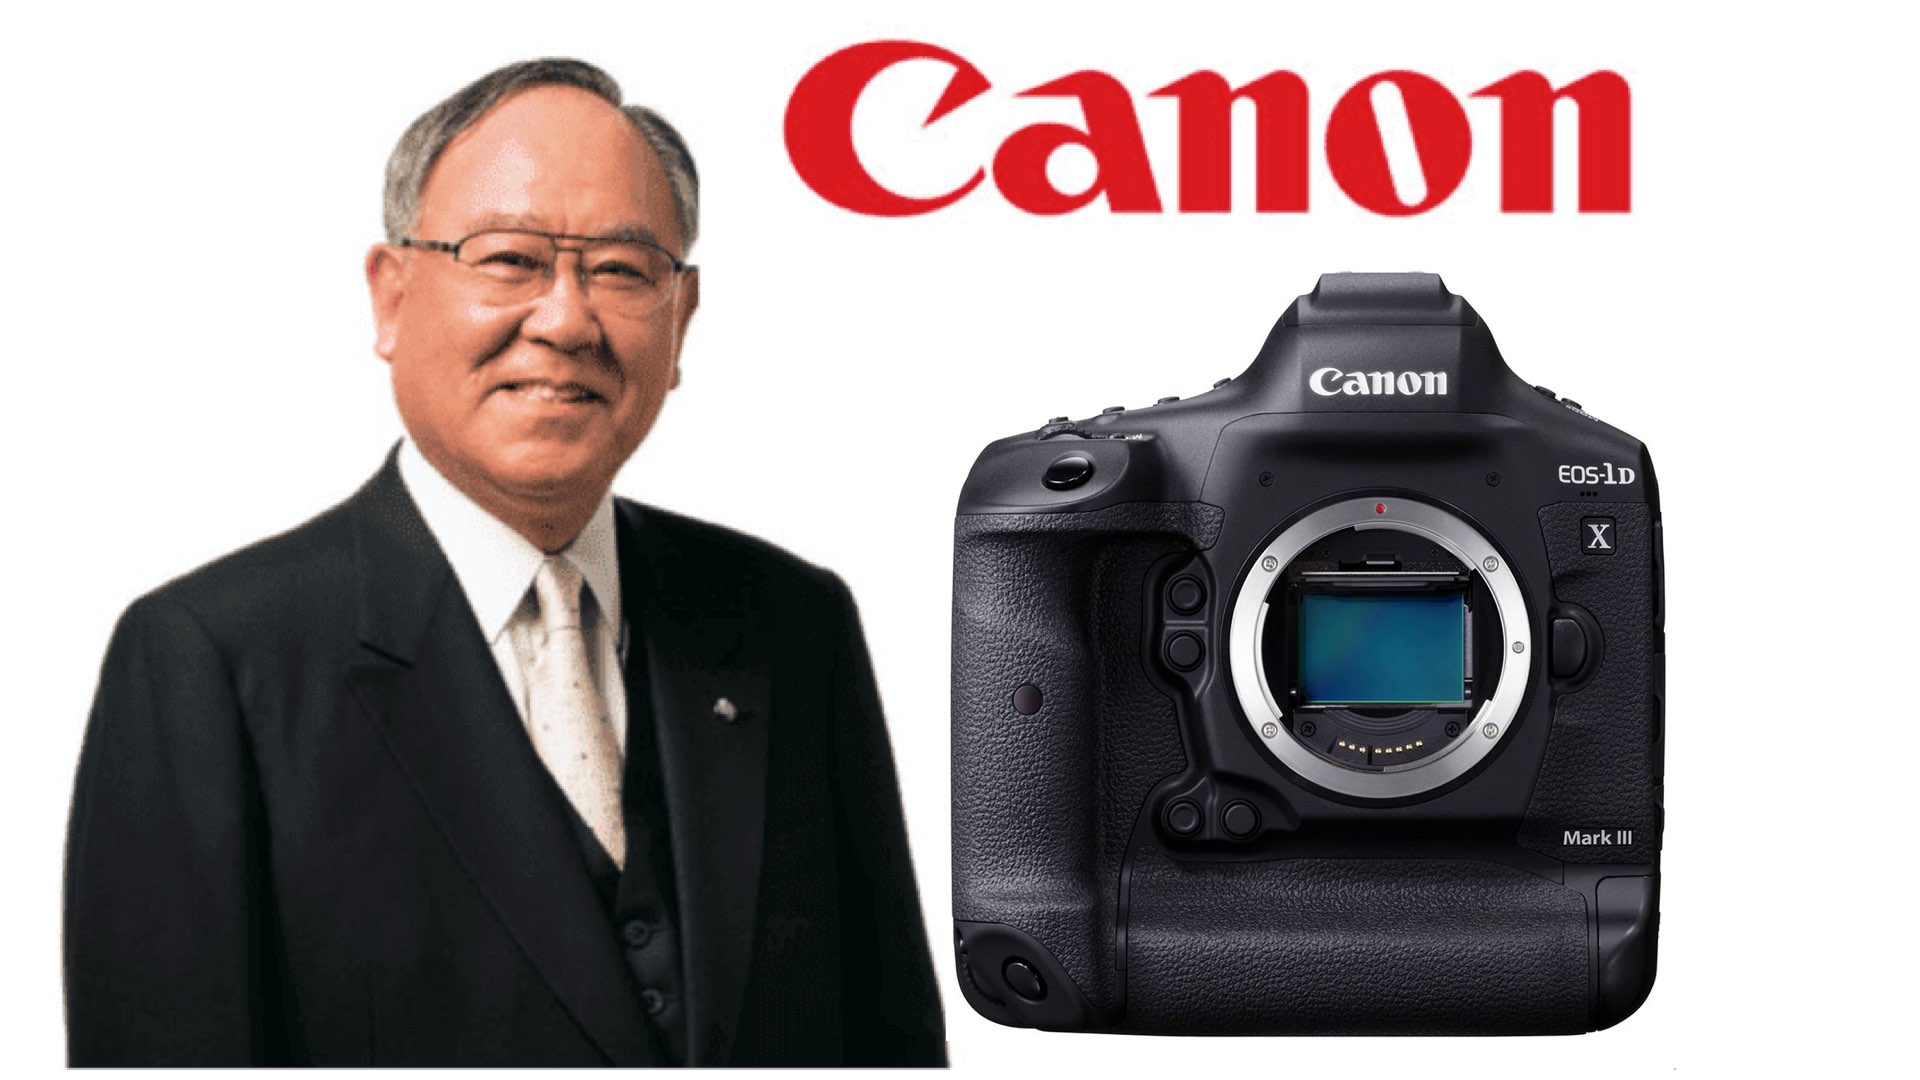 Canon's Chairman and CEO Fujio Mitarai: “EOS-1D X Mark III is our